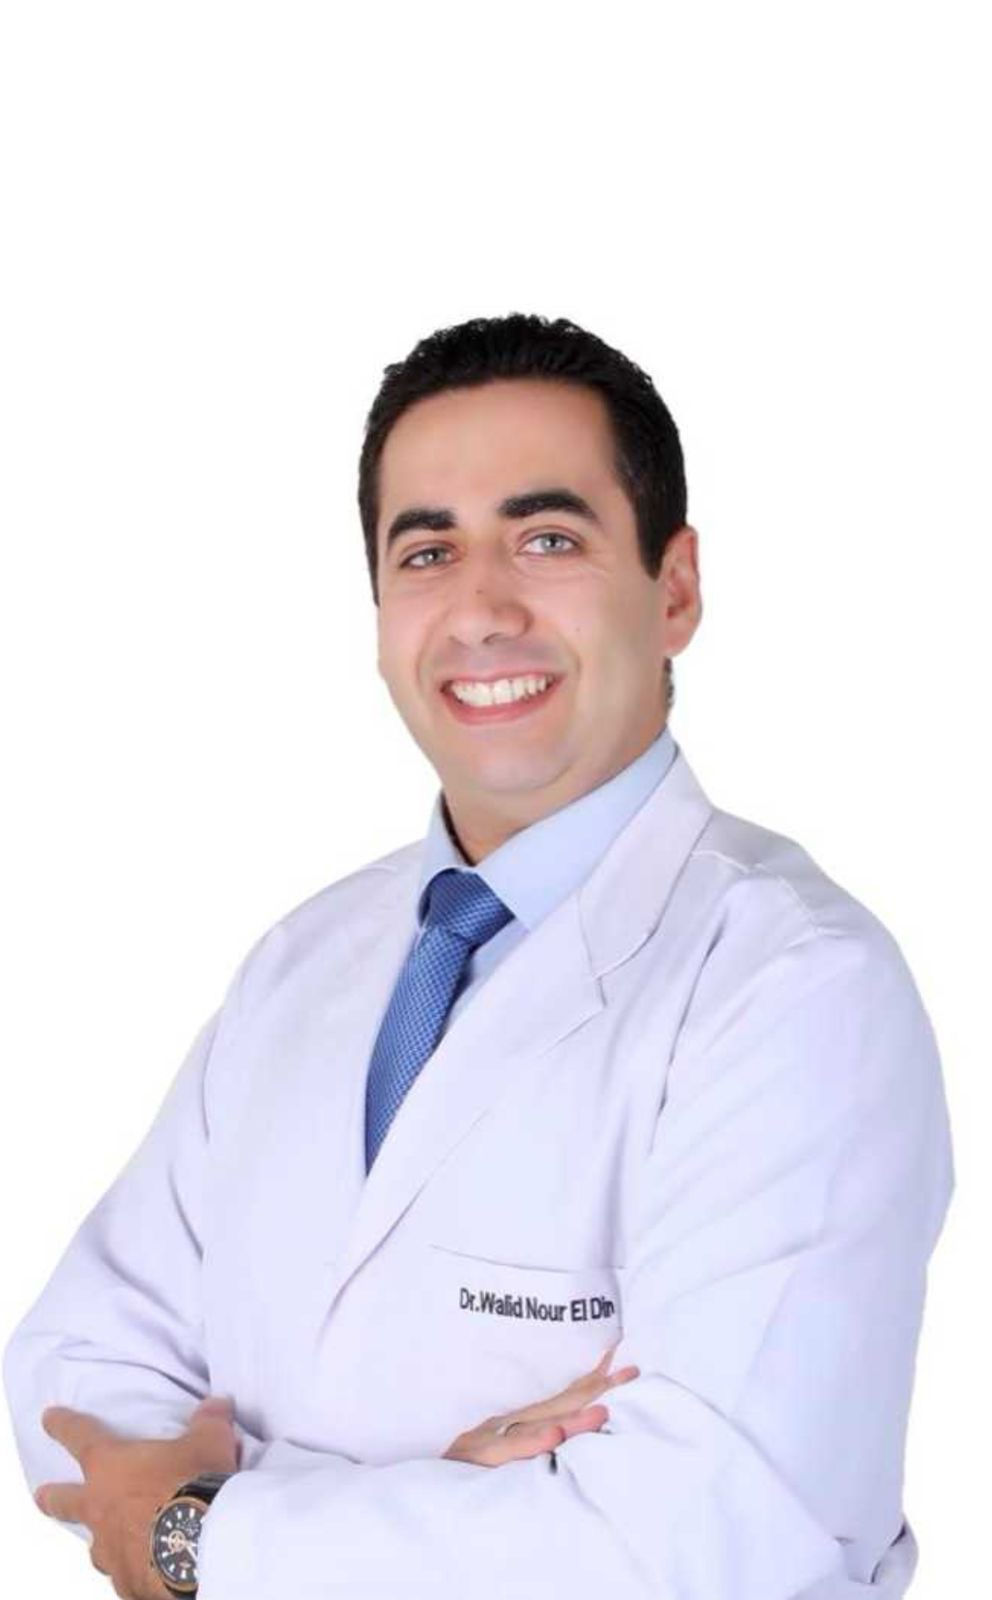 Dr. Walid Nour El Din